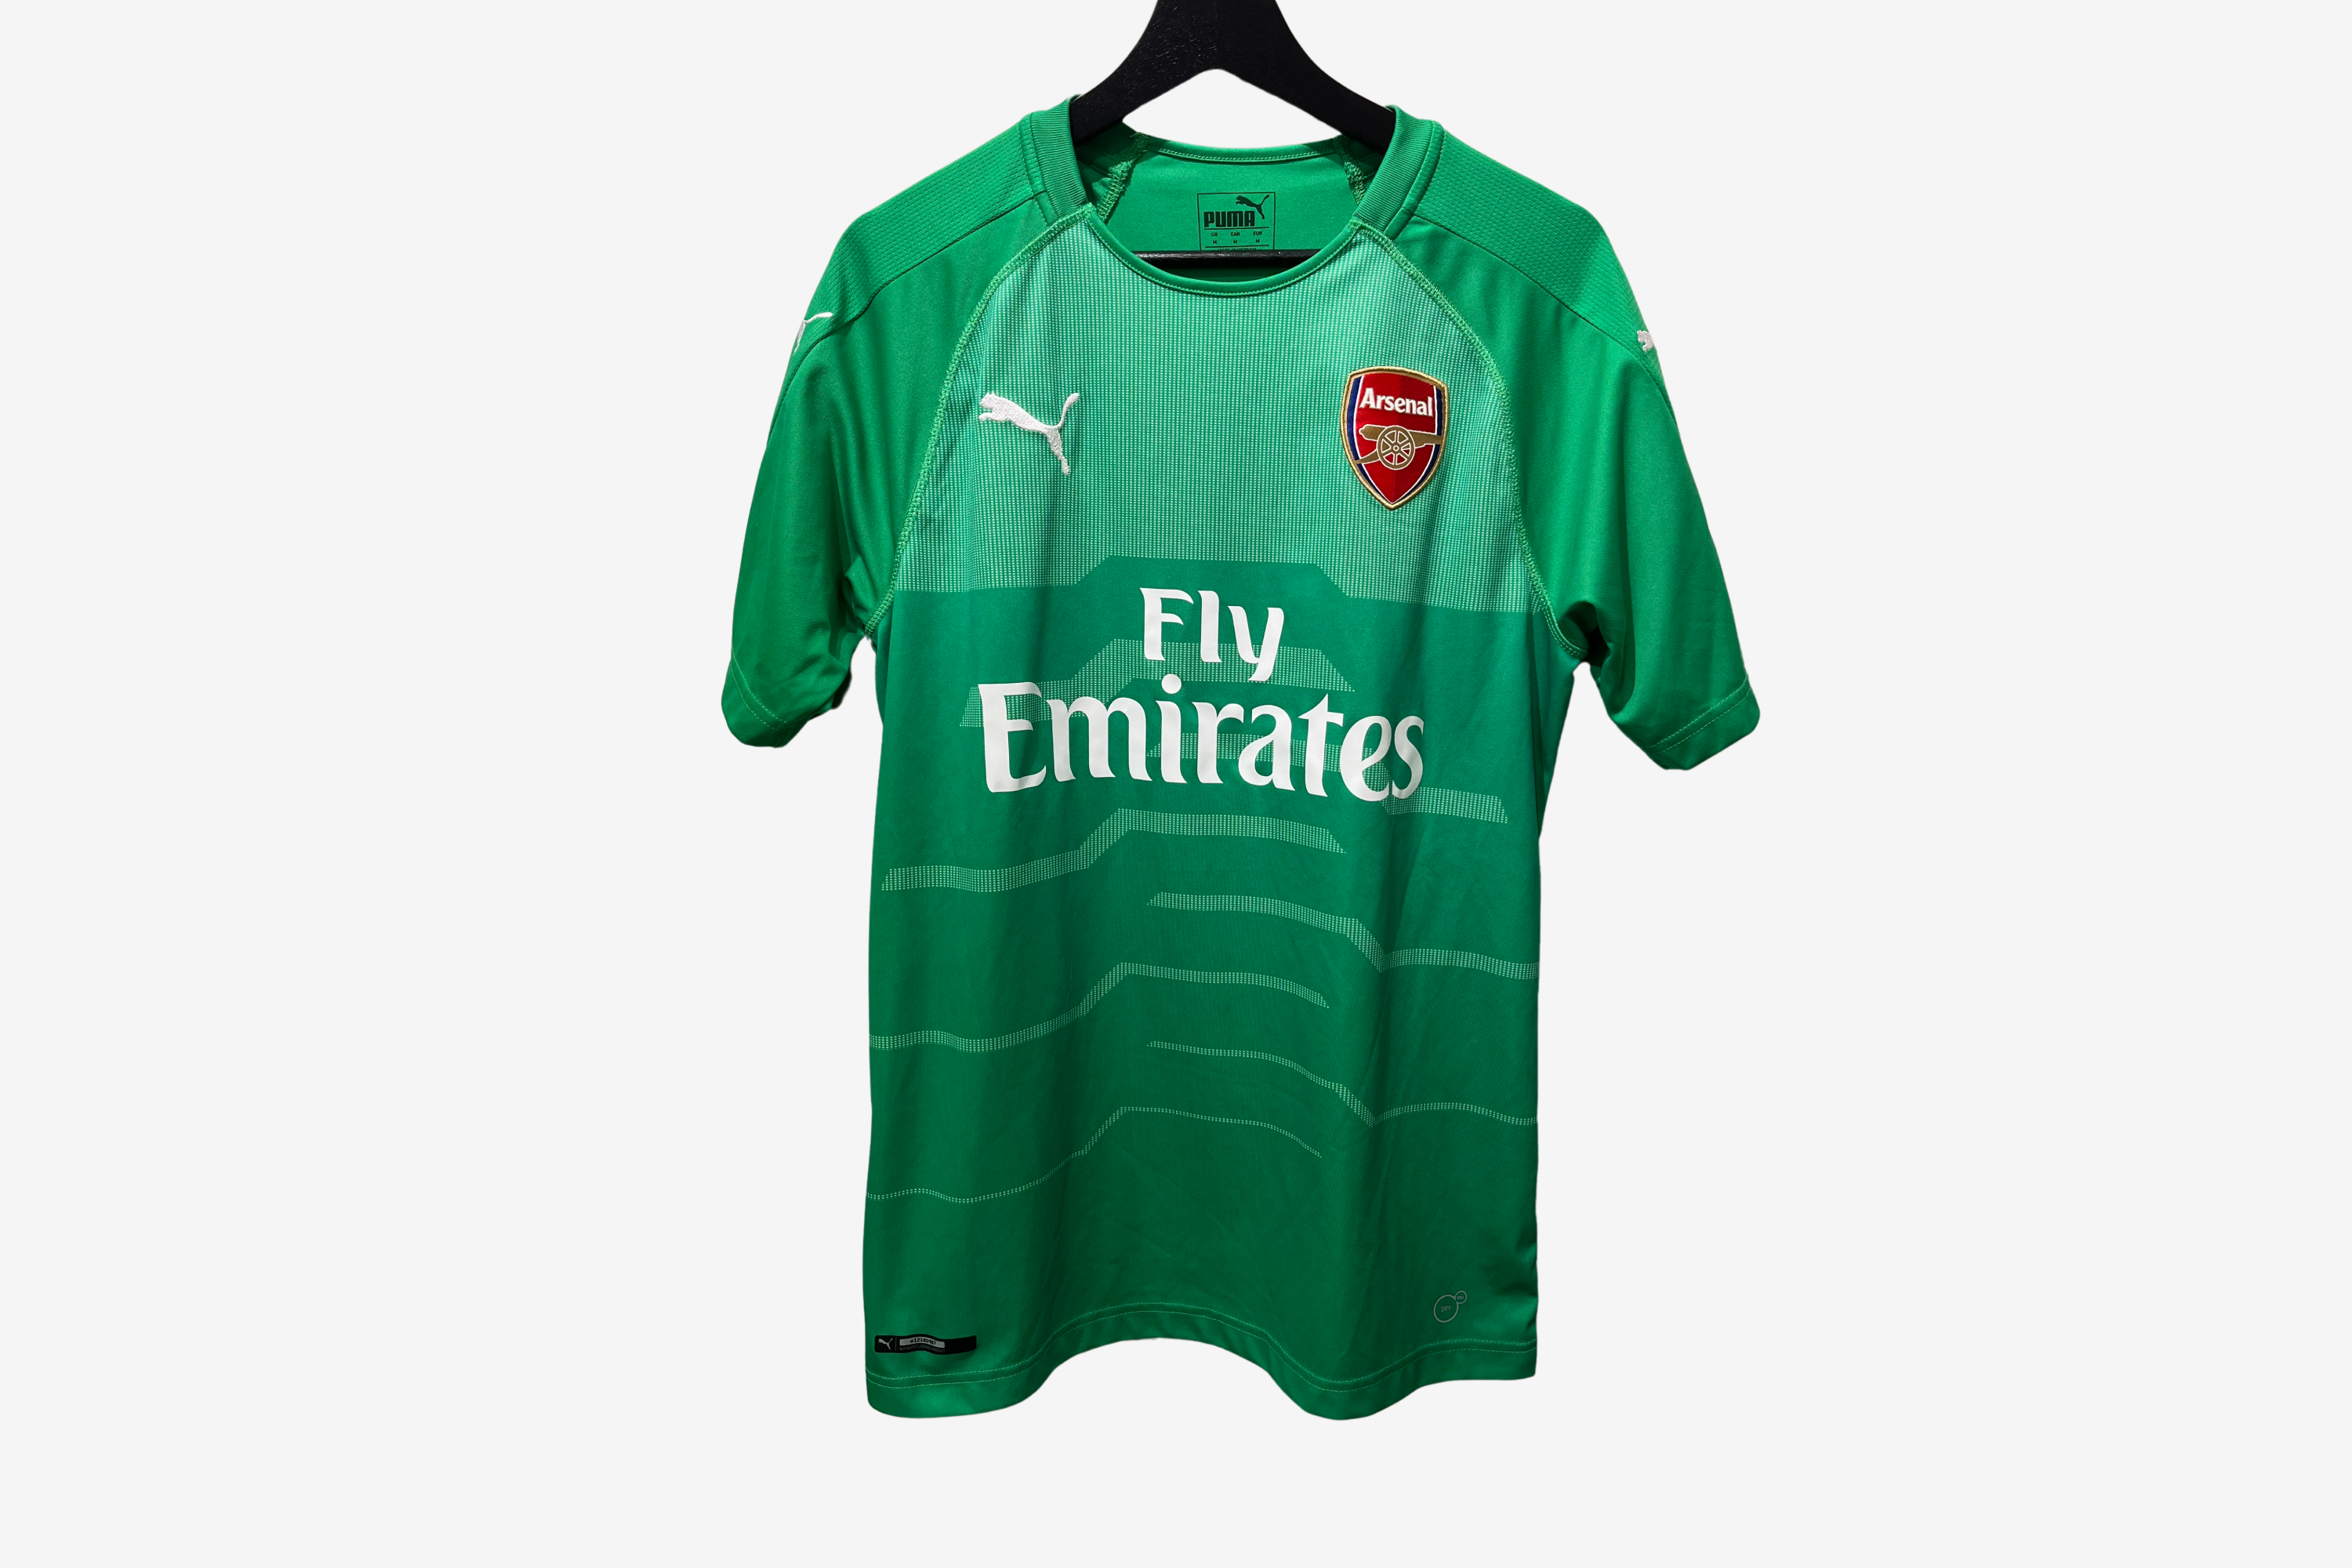 Puma - Arsenal 2018/19 Goalkeeper Football Shirt